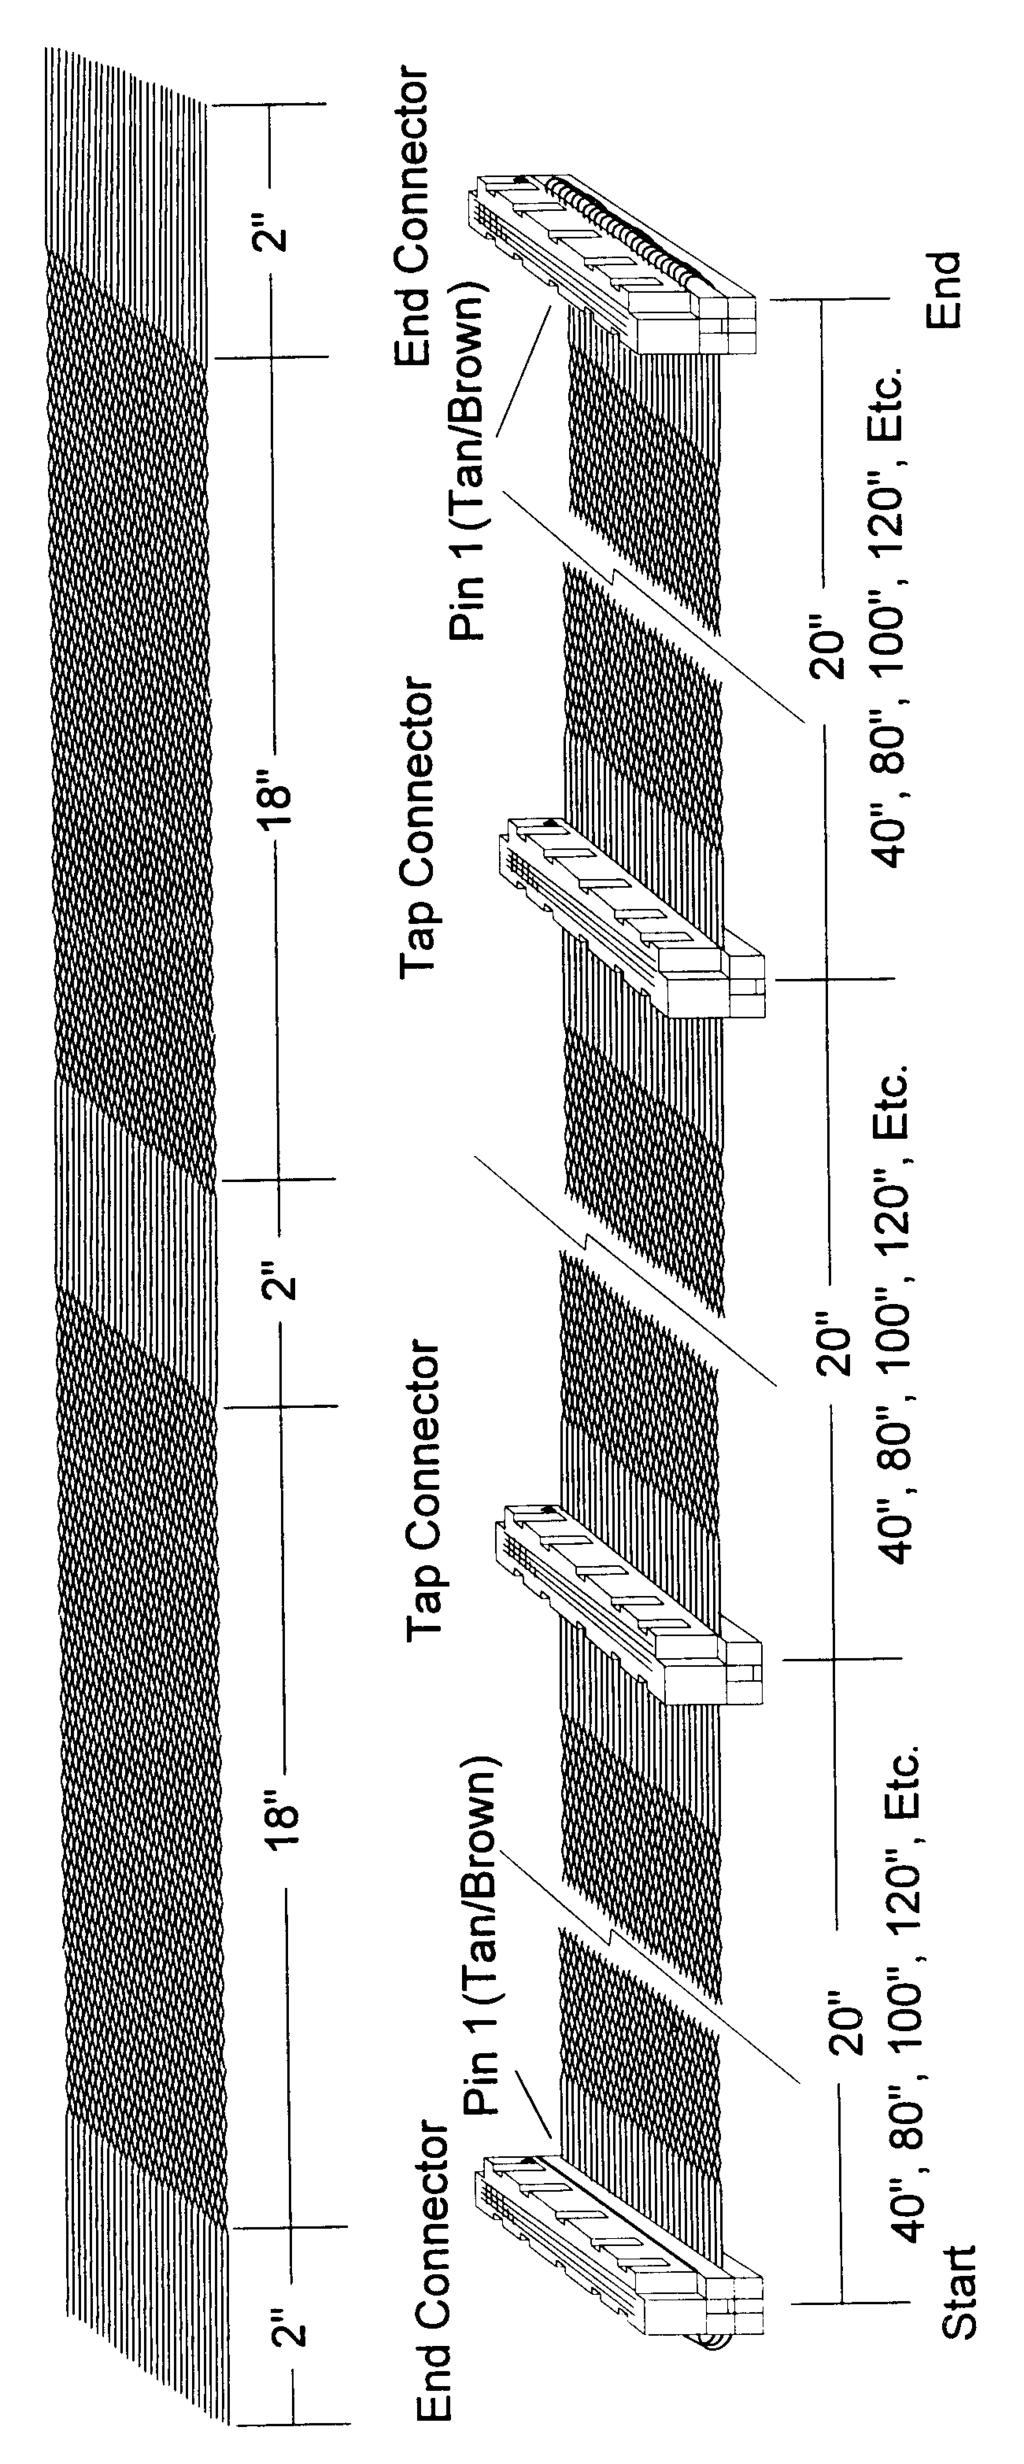 Figure 1-6: Twist-n-Flat Cable Dimensions GE FANUC PLCs 1-10